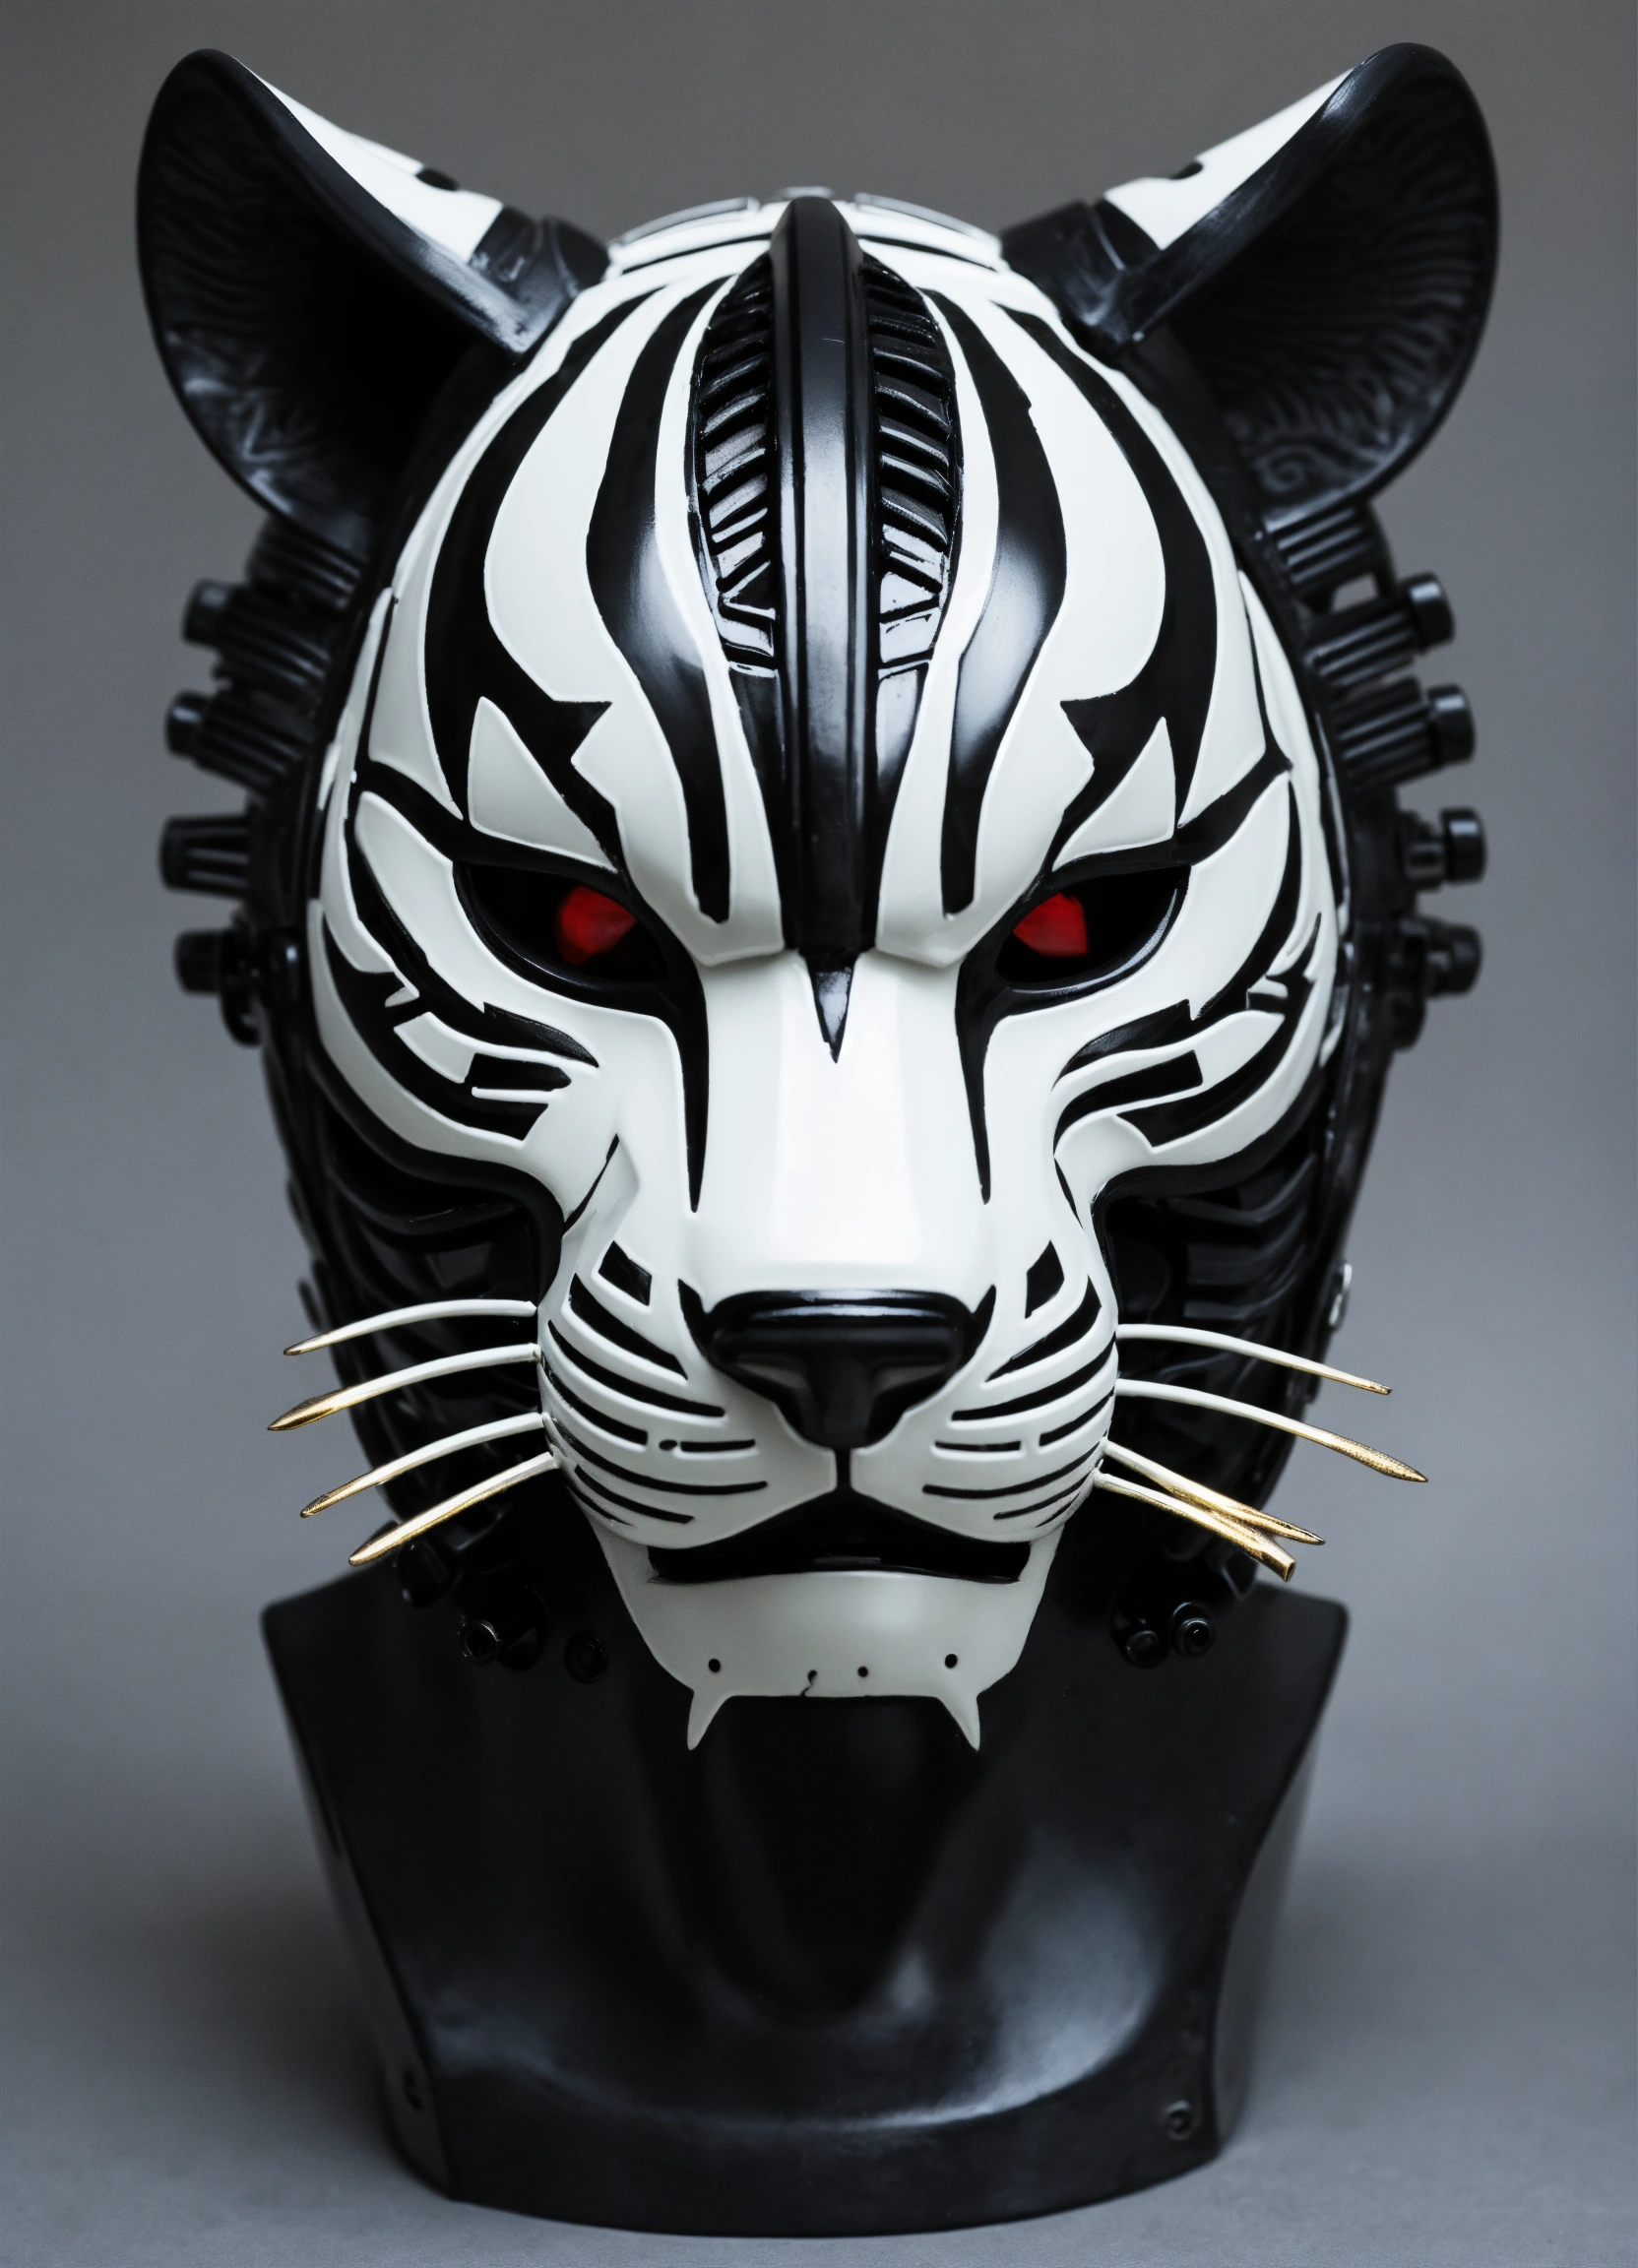 Lexica Cyberpunk Gas Samurai Tiger Mask White And Black Intricate Details 5349